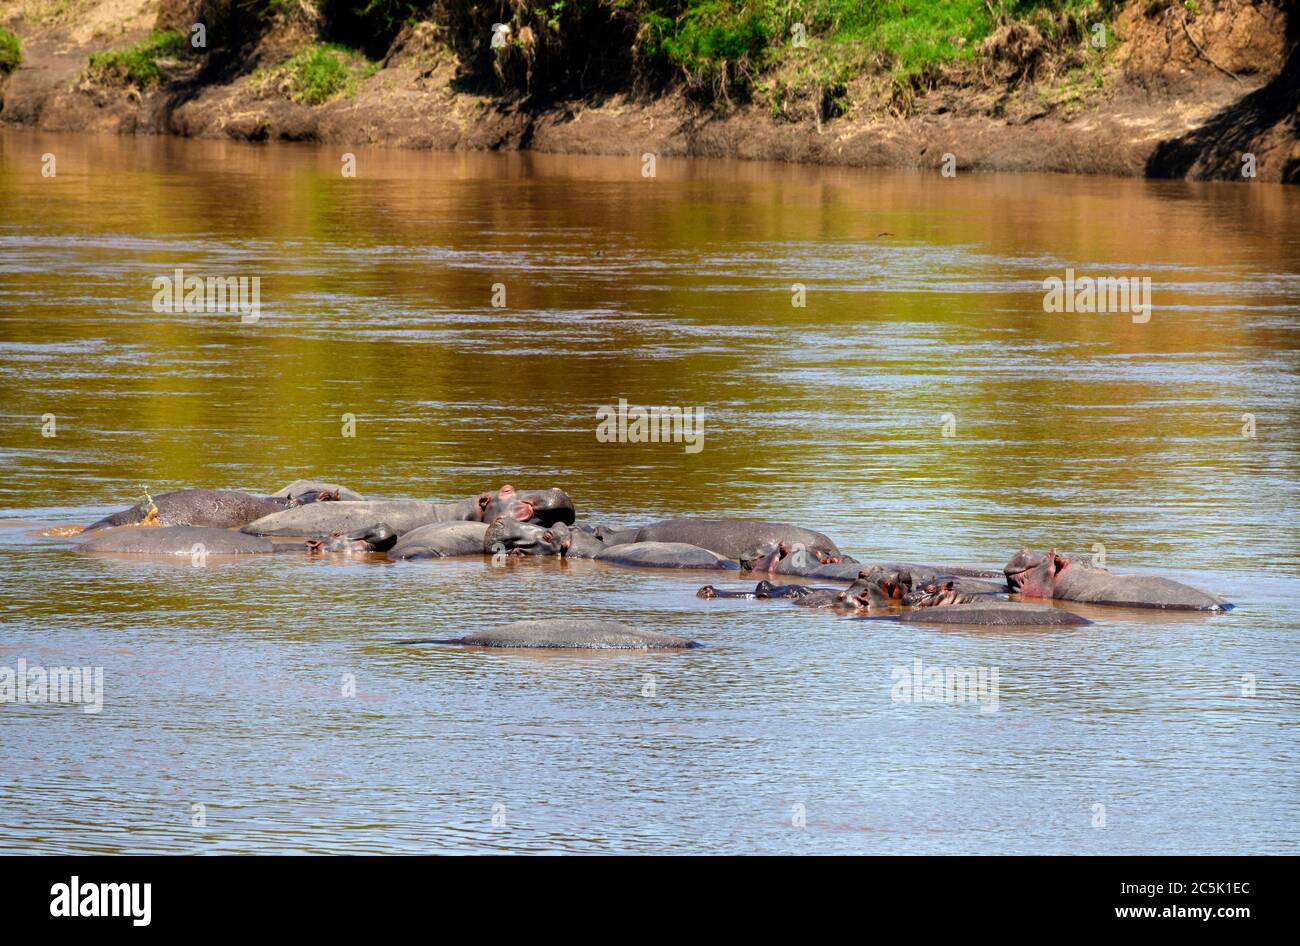 Commmon Hippopotamus (Hippopotamus amphibius). Hippos in the Mara River, Mara Triangle, Masai Mara National Reserve, Kenya, East Africa Stock Photo